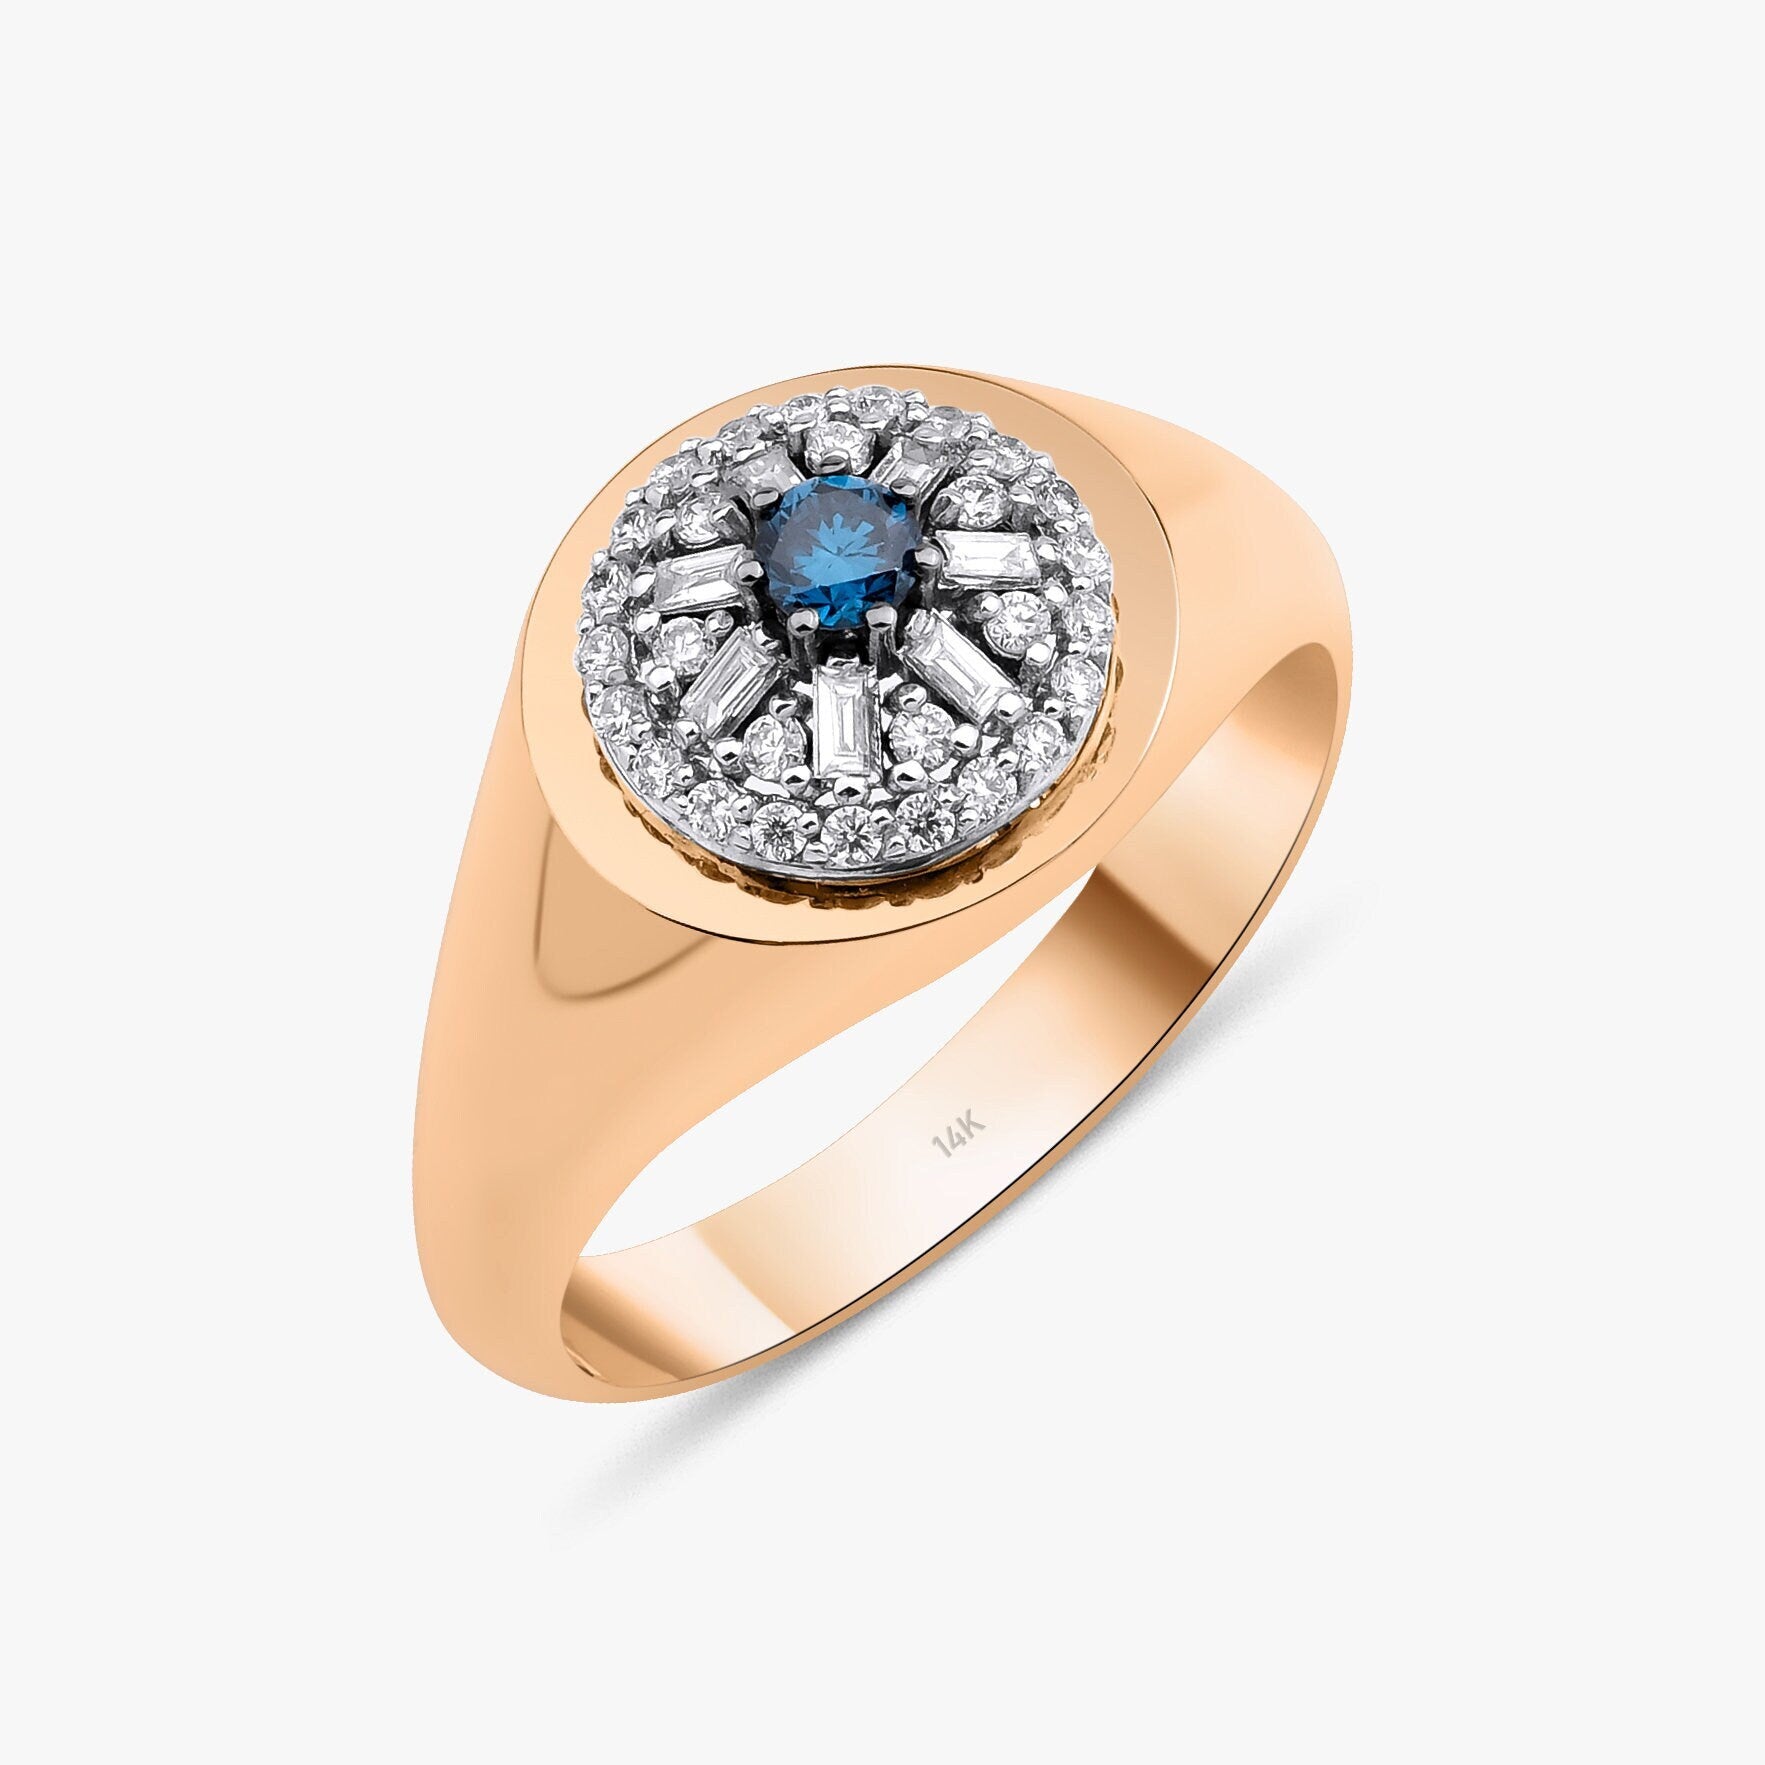 Blue Diamond Ring in 14K Gold / Winter Sun